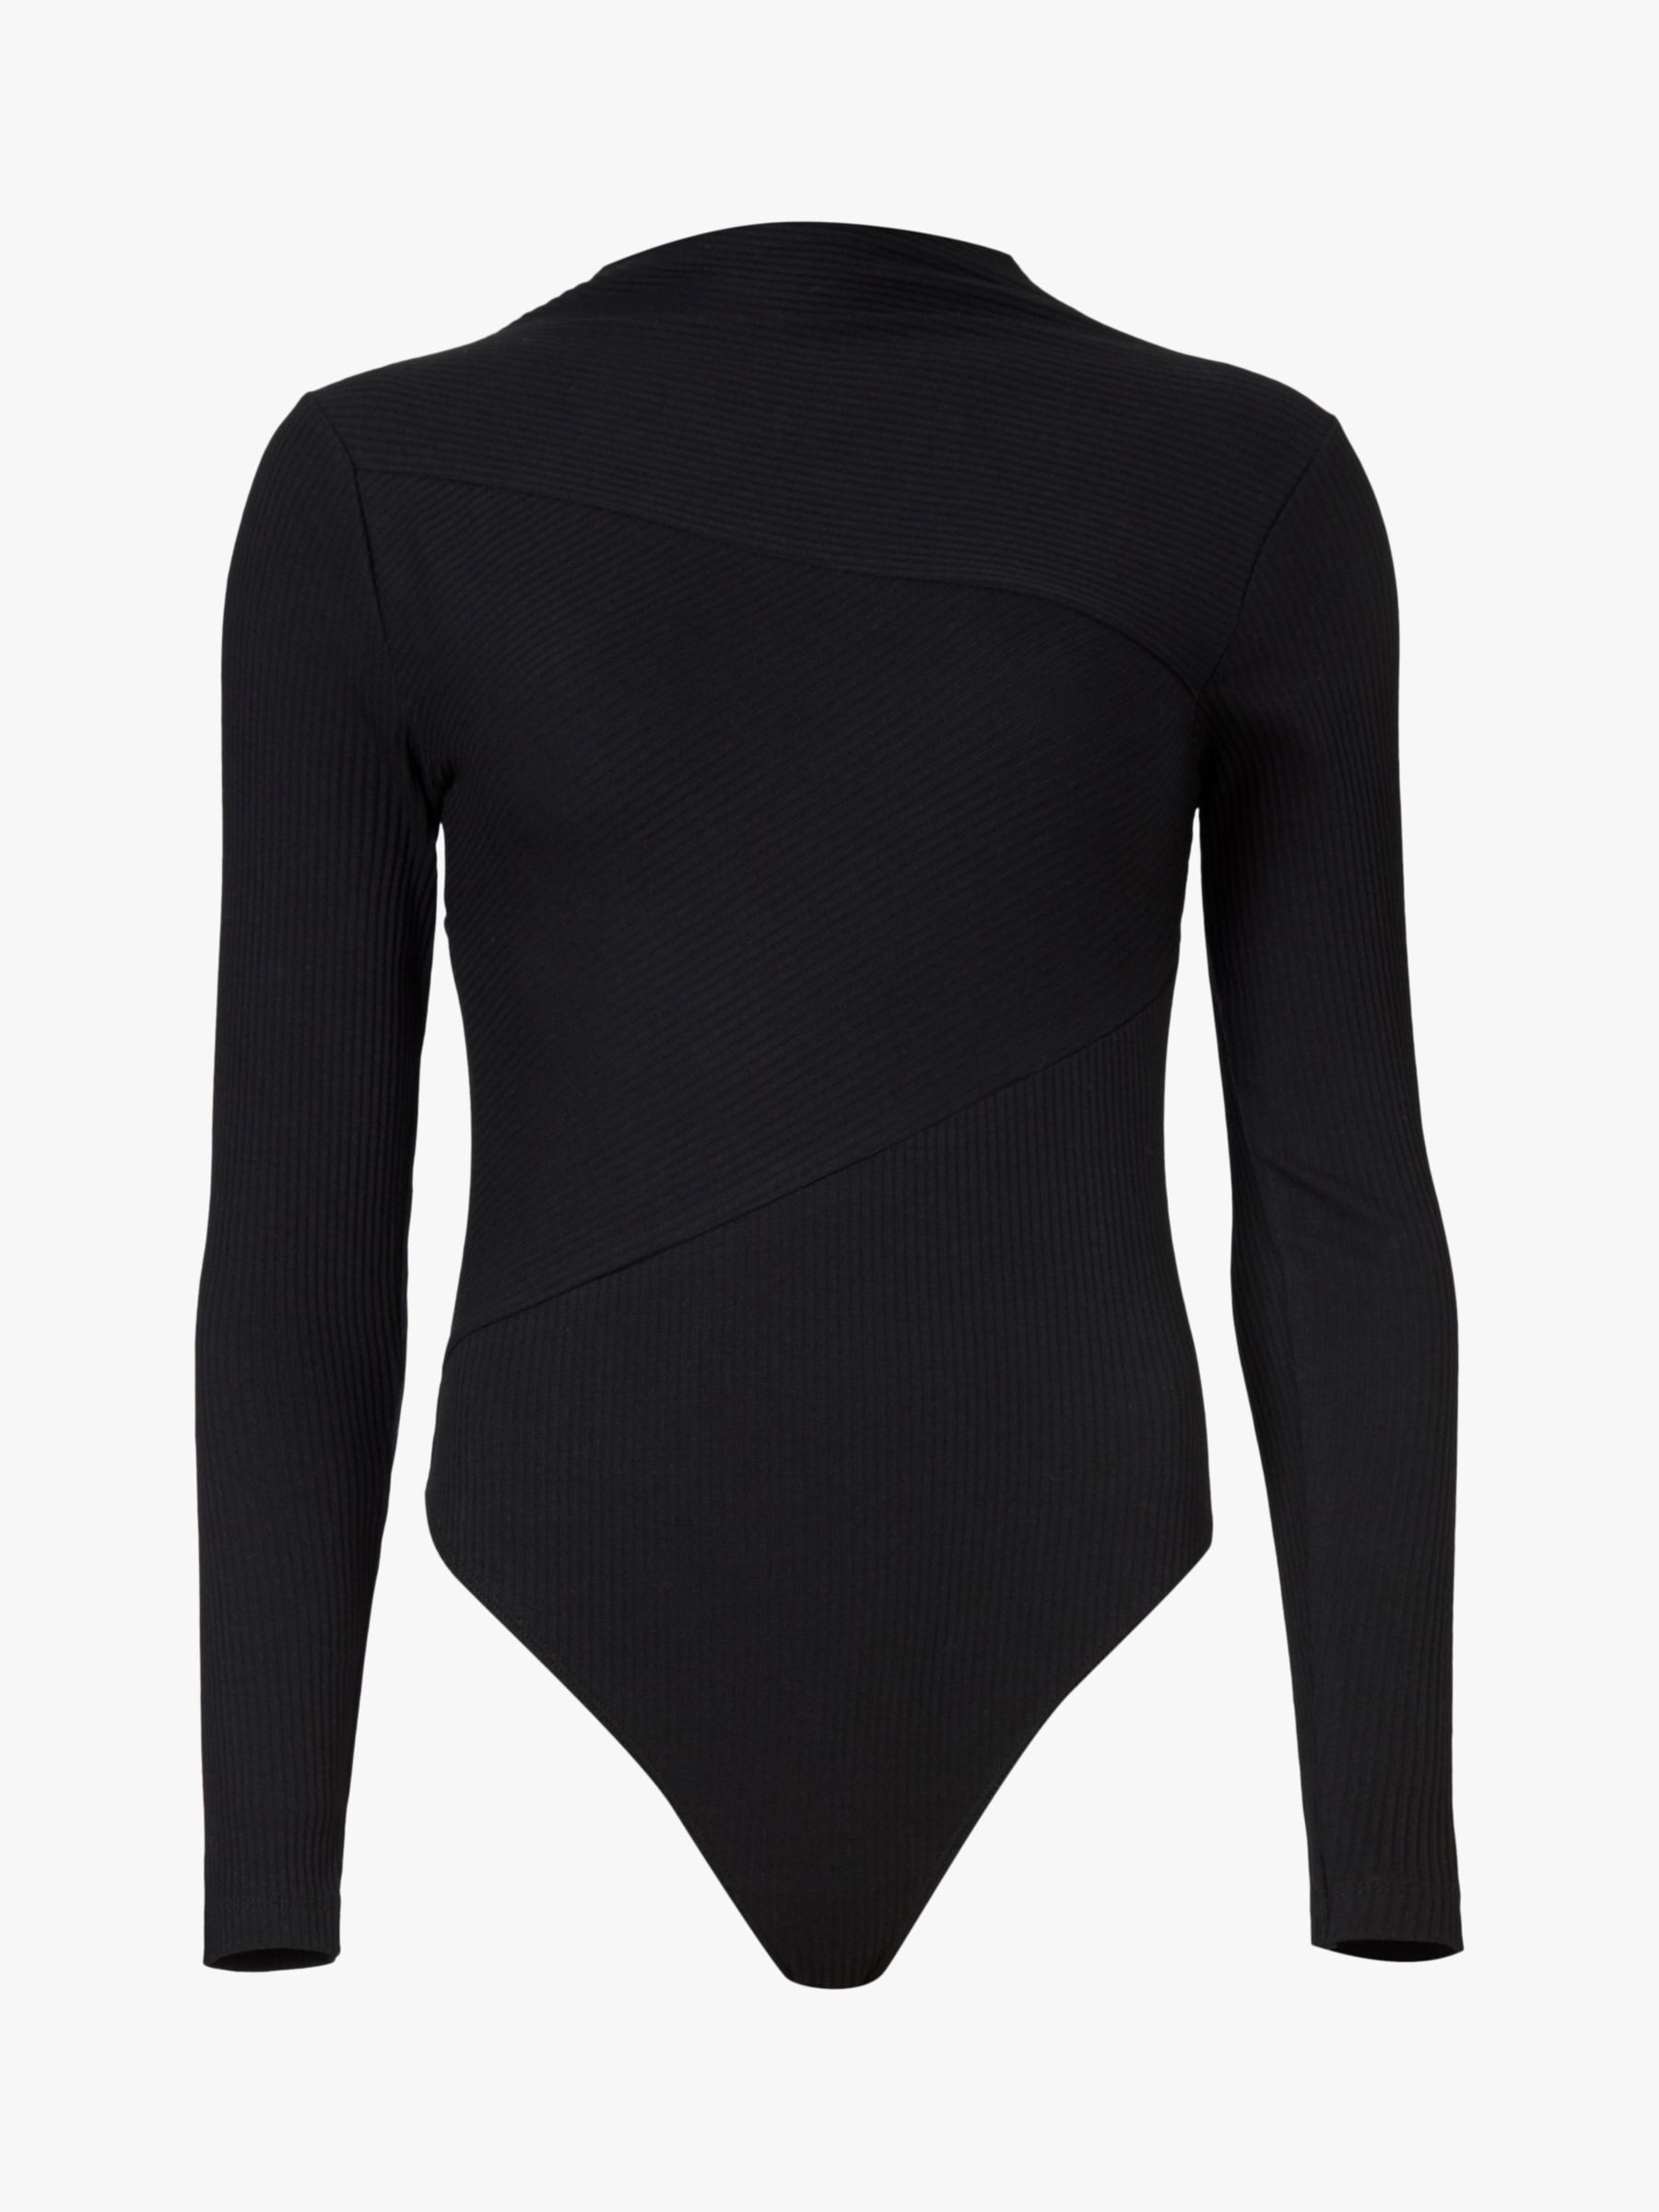 AllSaints Gia Long Sleeved Bodysuit, Black at John Lewis & Partners